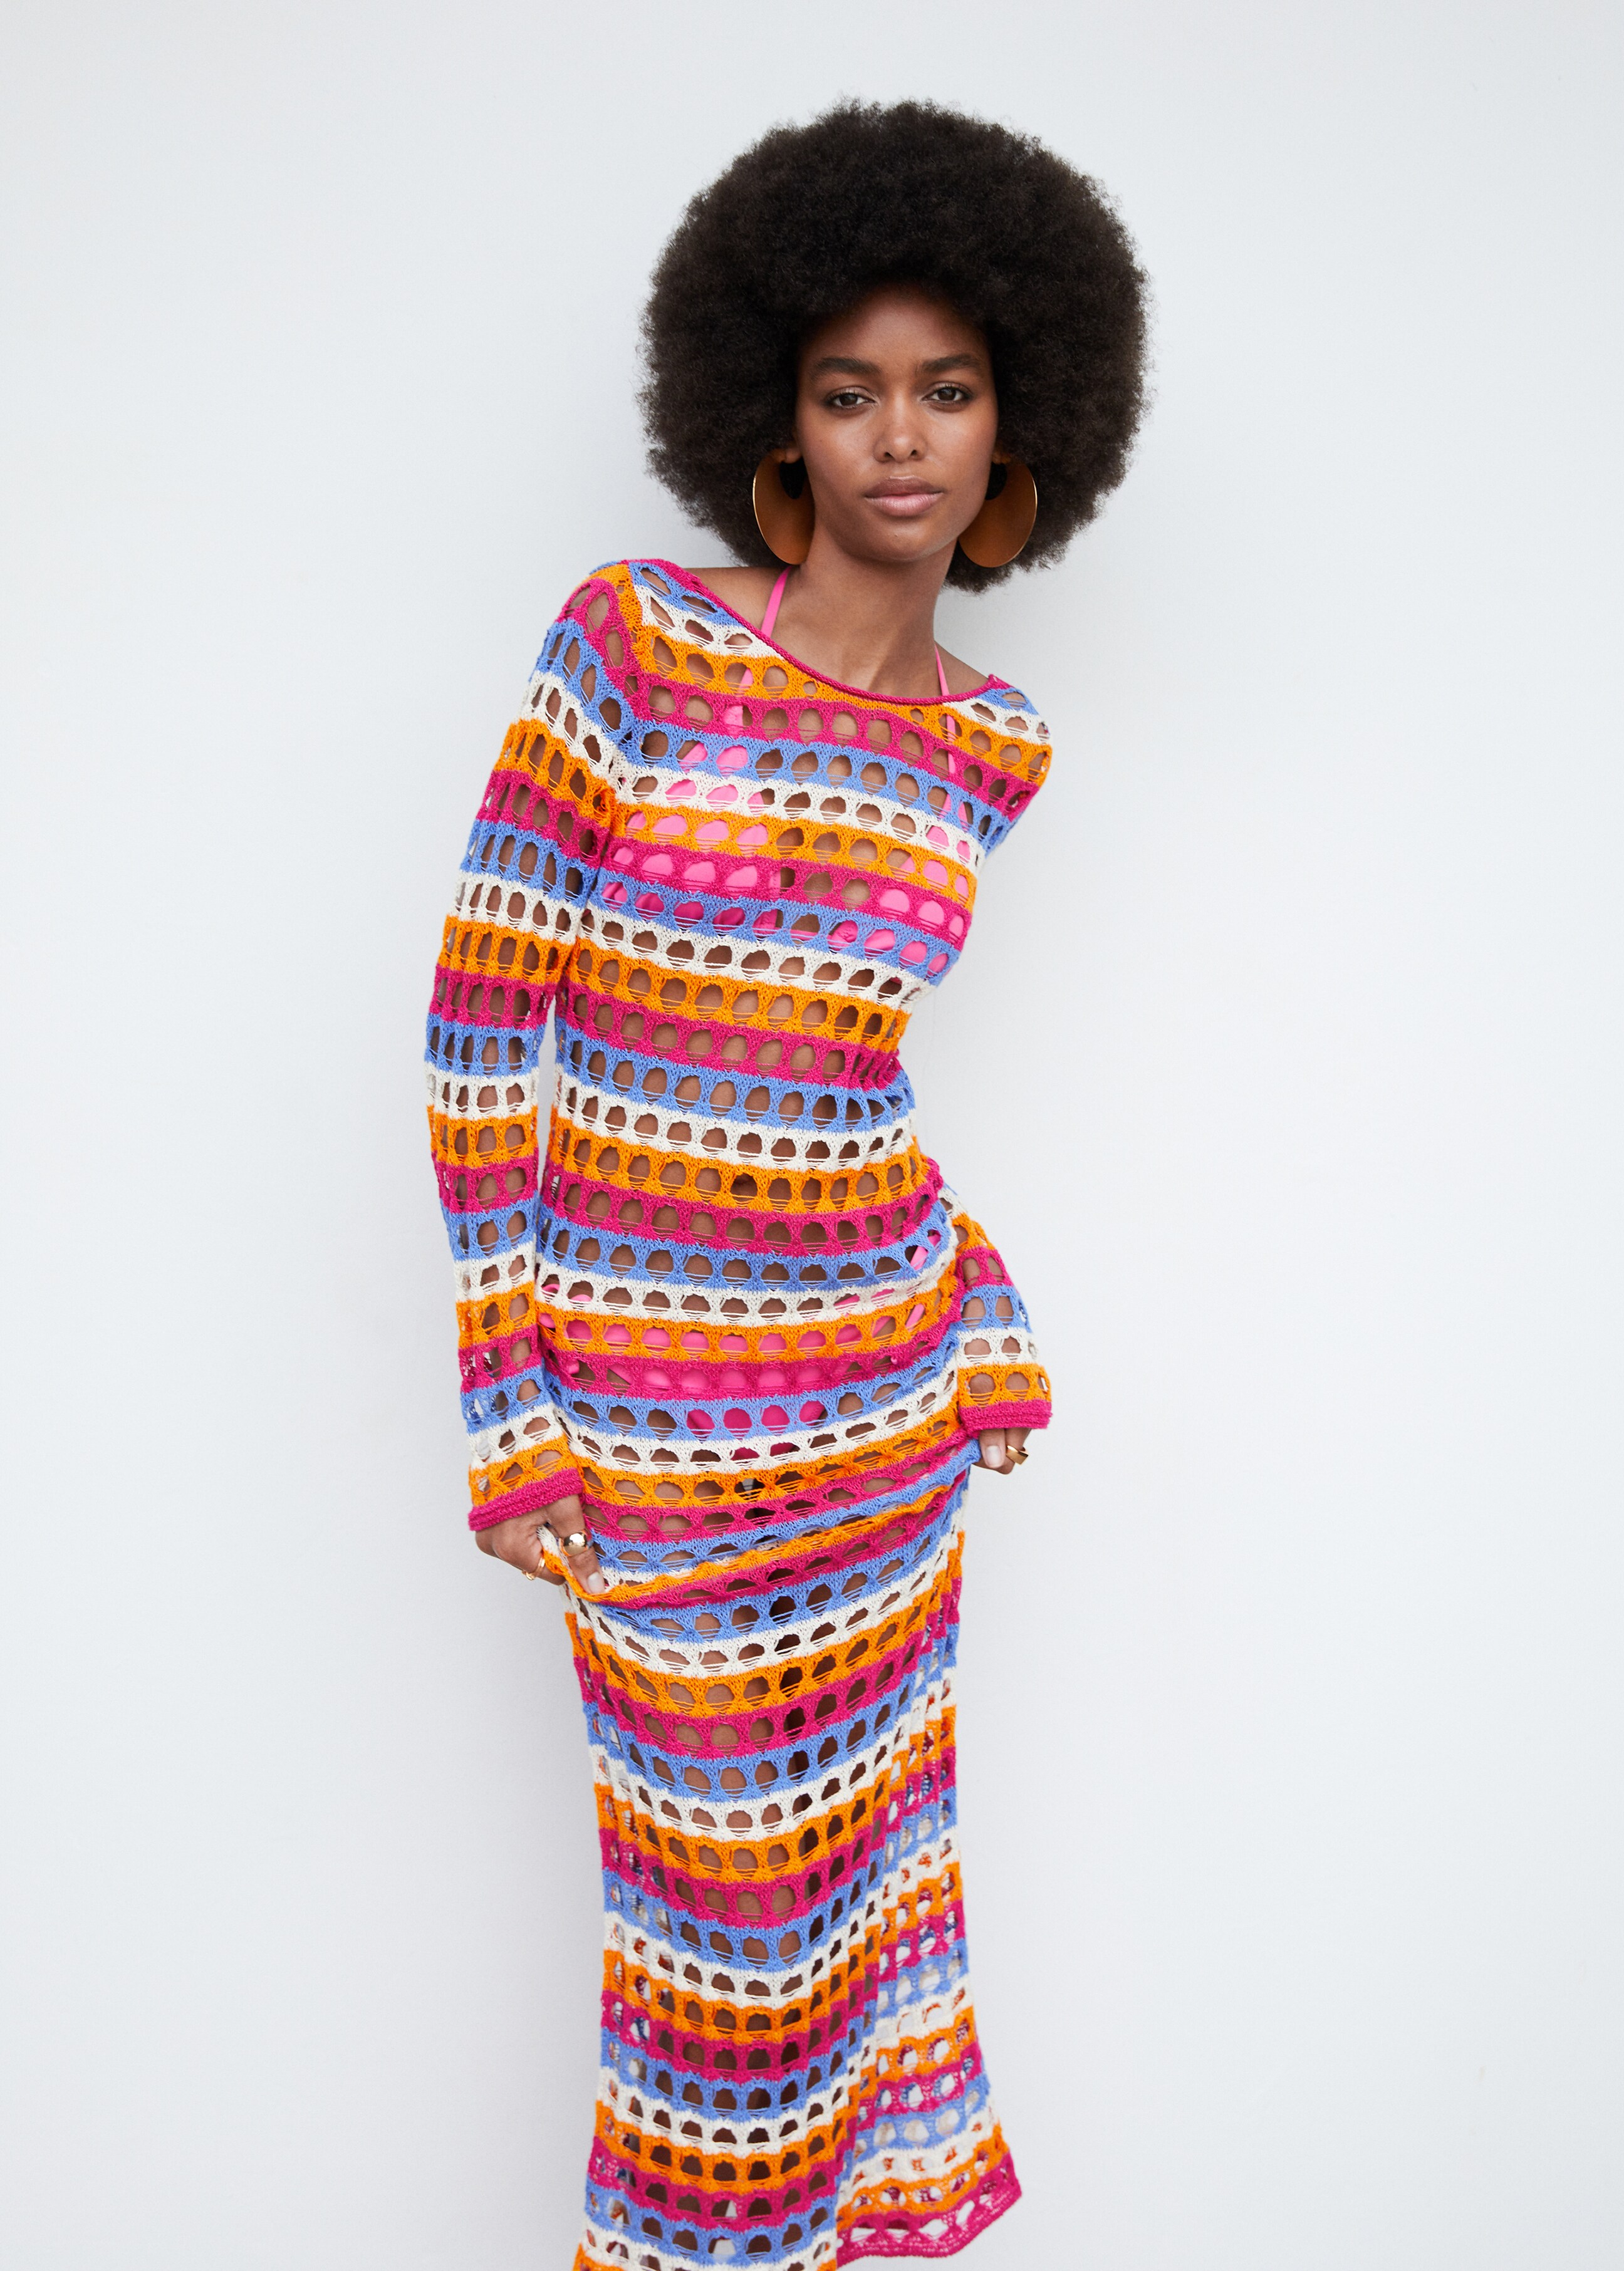 Multi-coloured crochet dress - Medium plane